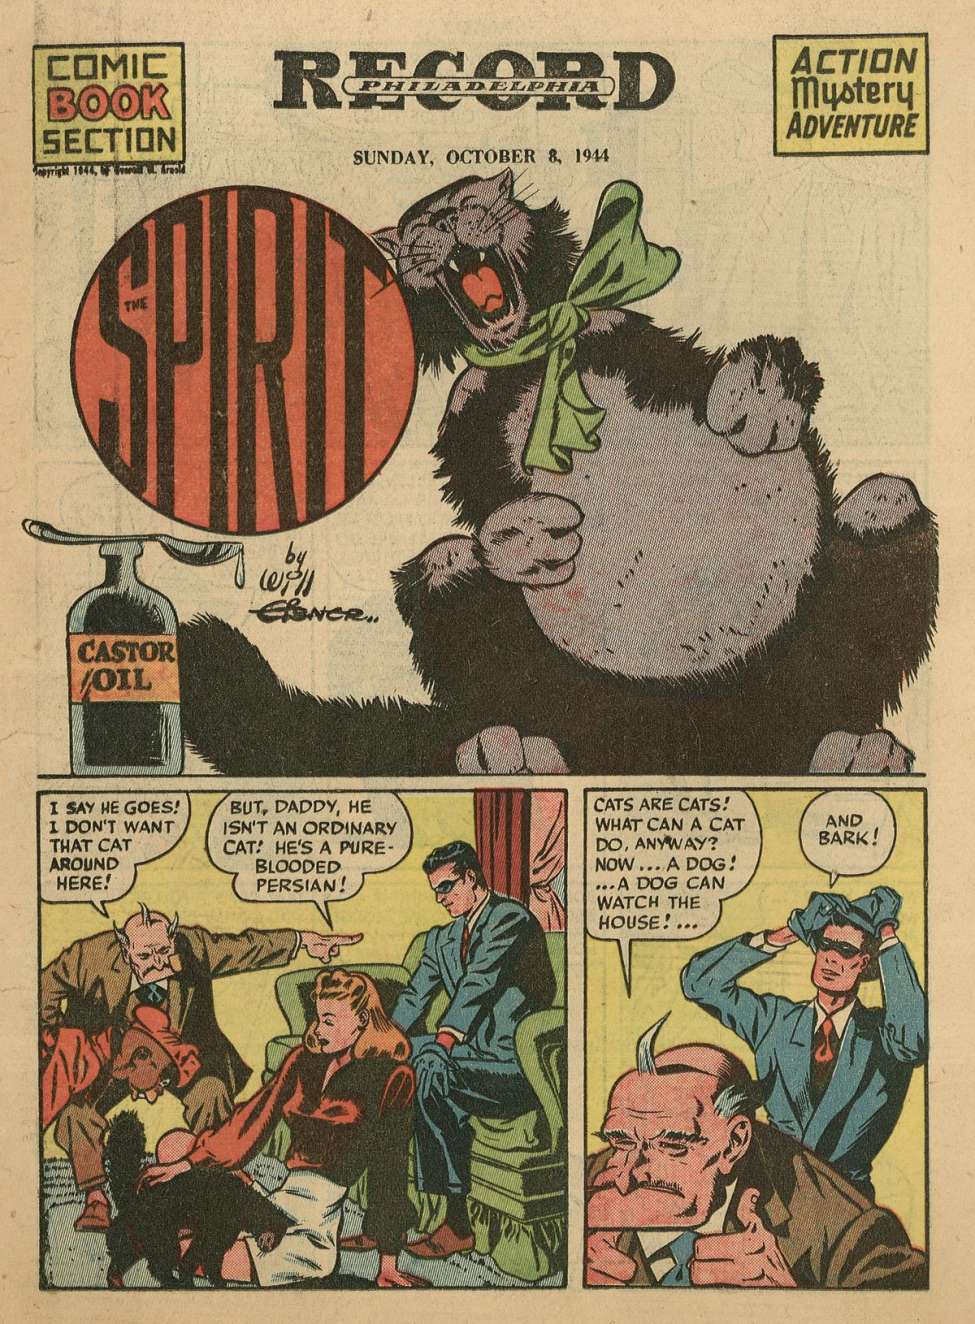 Comic Book Cover For The Spirit (1944-10-08) - Philadelphia Record